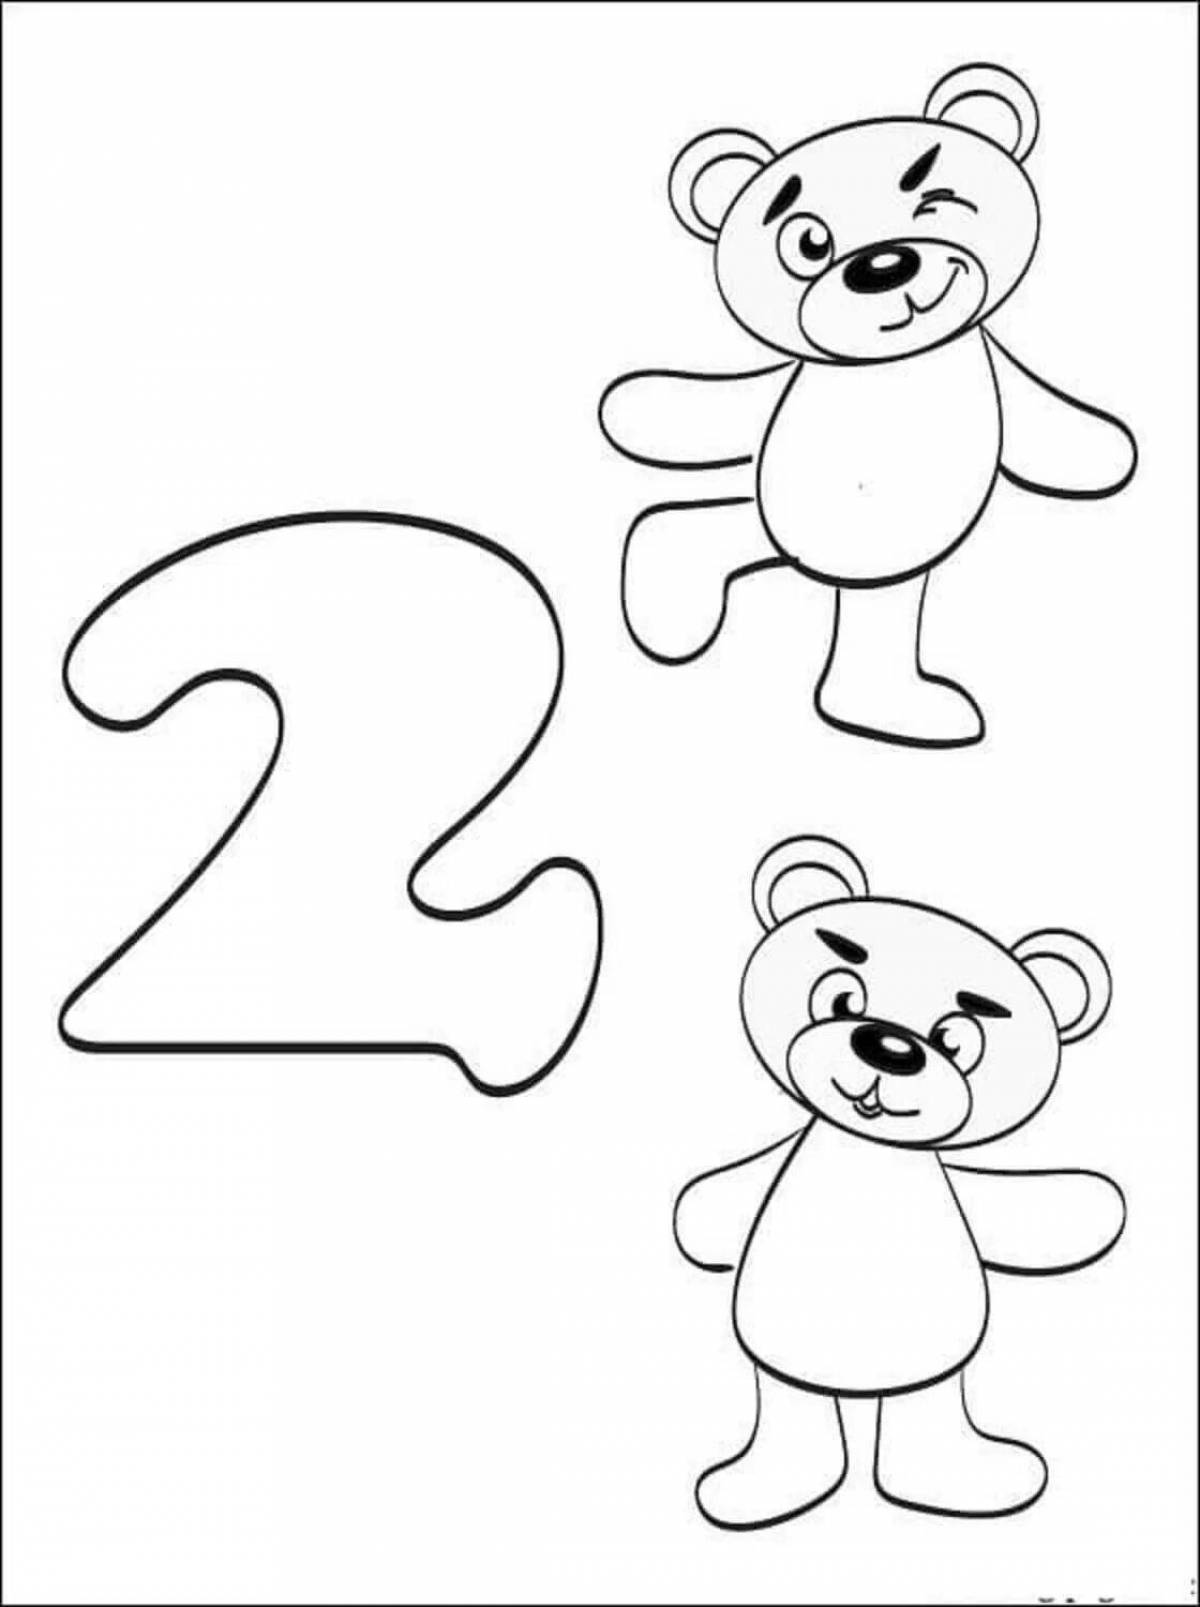 Fun coloring number 2 for preschoolers